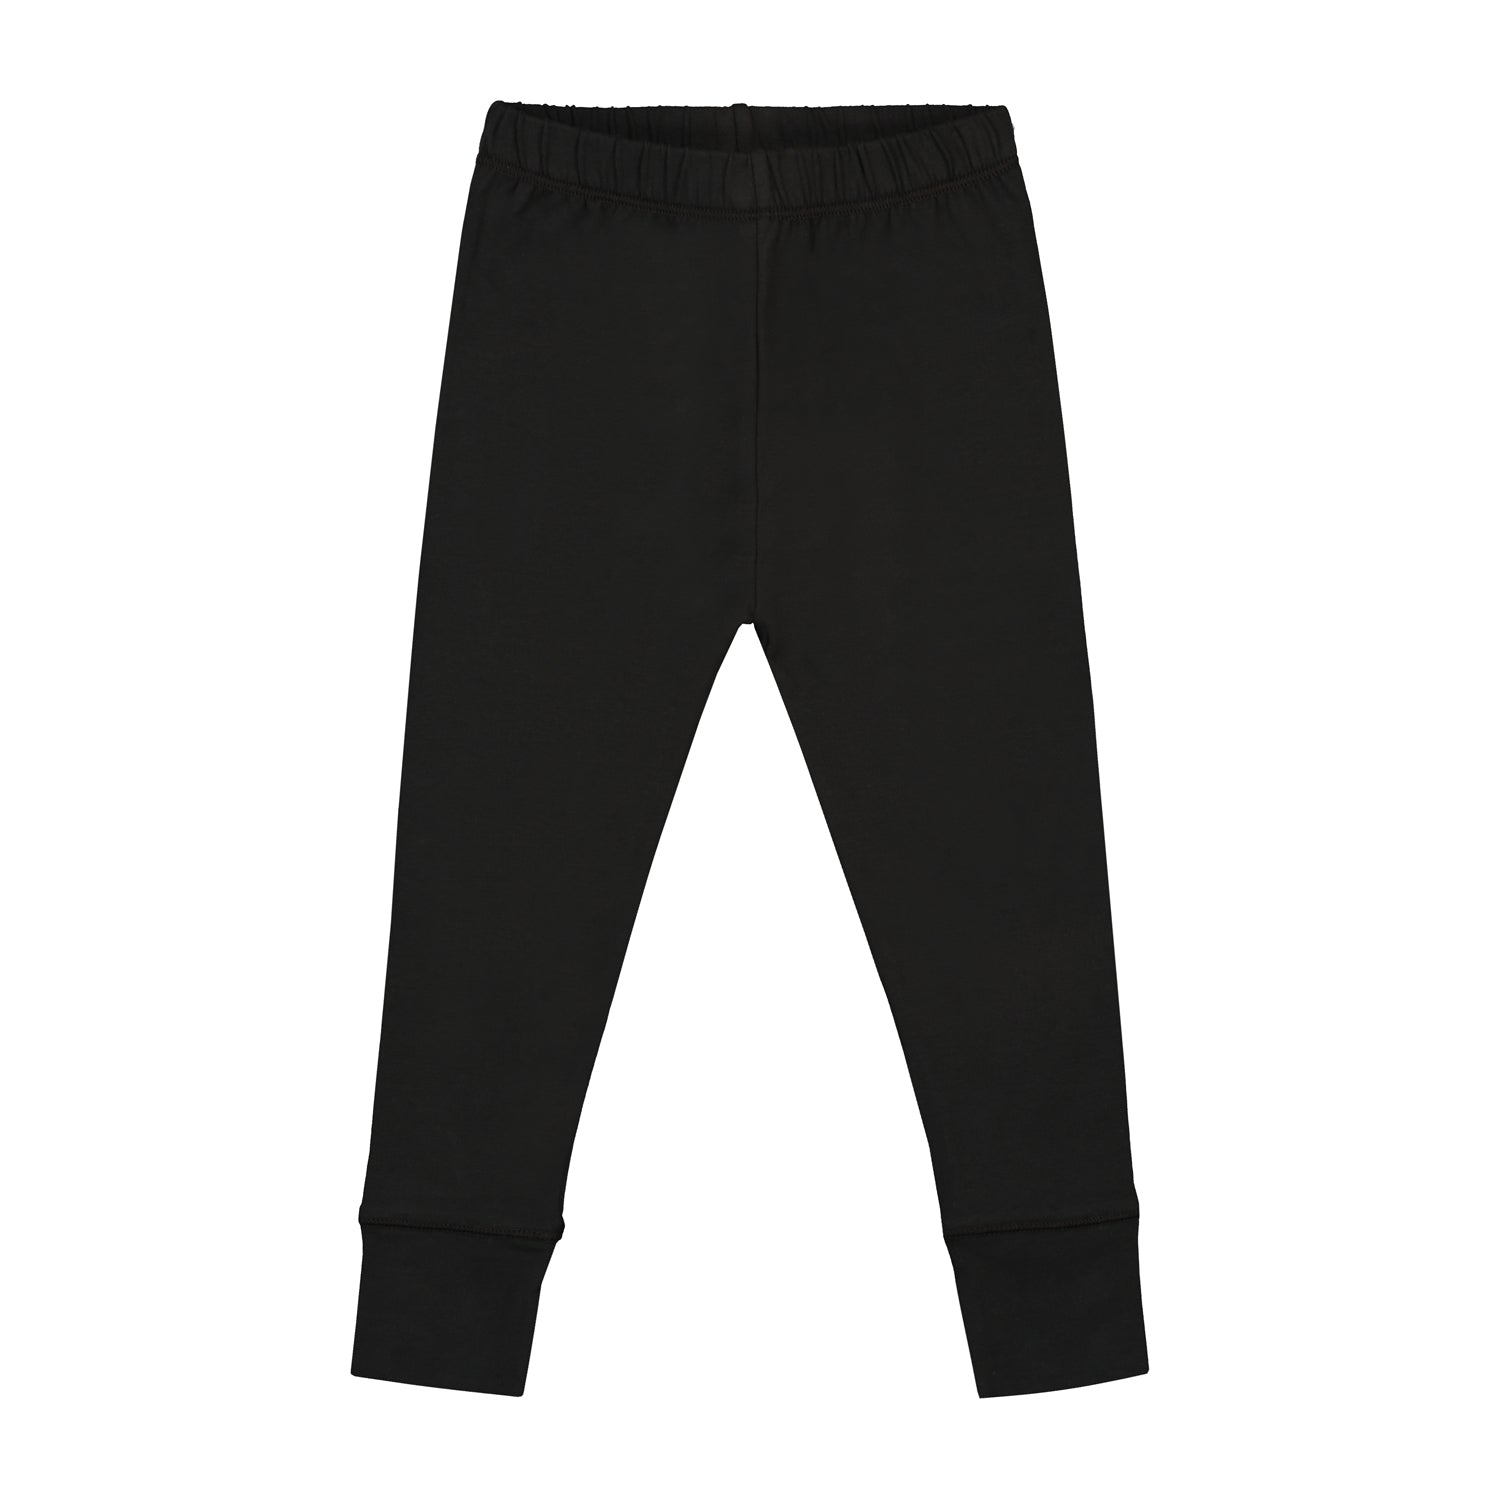 gray label leggings nearly black – kodomo